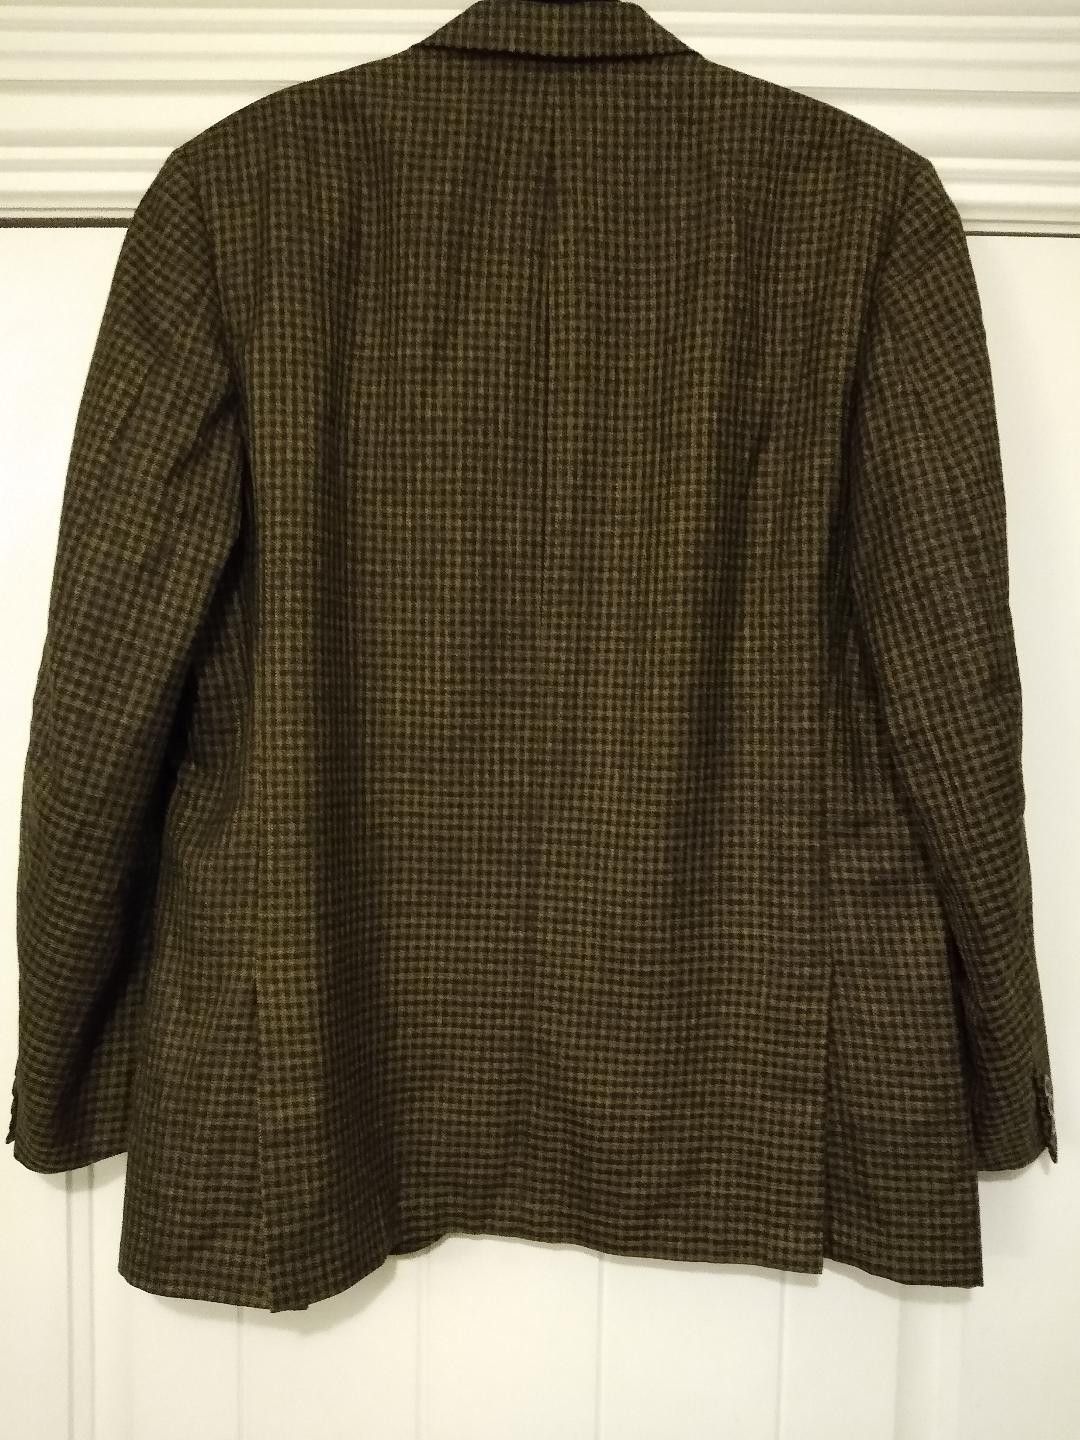 Vintage Vintage 60's 100% Wool Checkered 2 Button Blazer Size 40R - 2 Preview